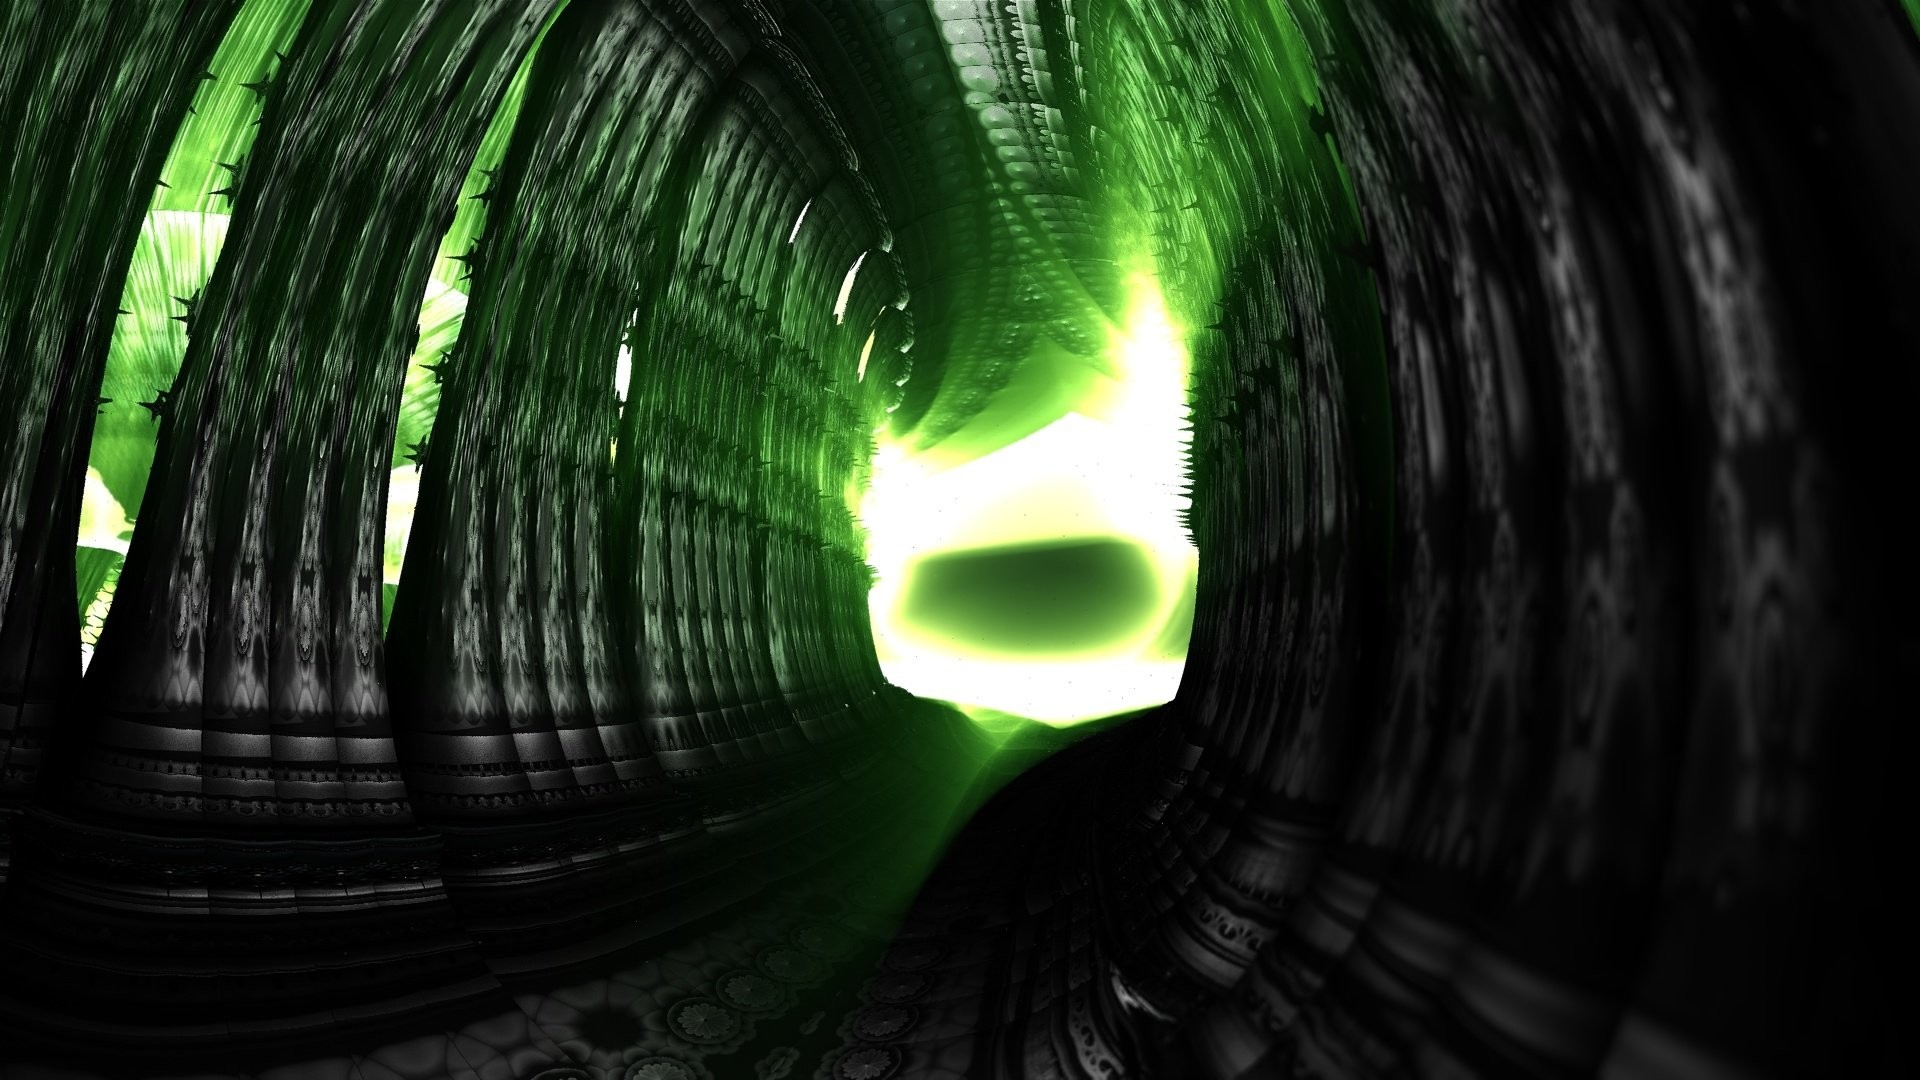 Abstract – Fractal Digital Abstract Dark Black Green 3D CGI Artistic Wallpaper